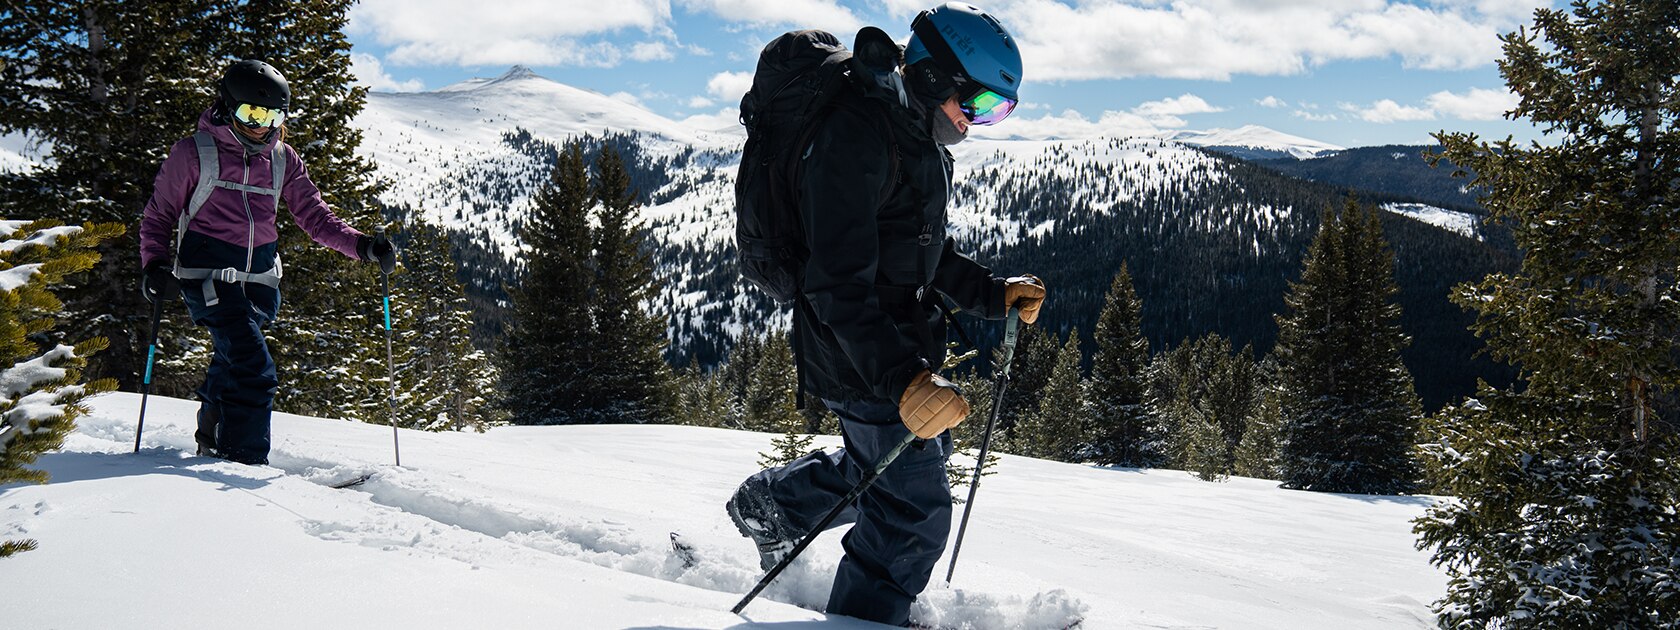 image of 2 people ski touring wearing zeal goggles